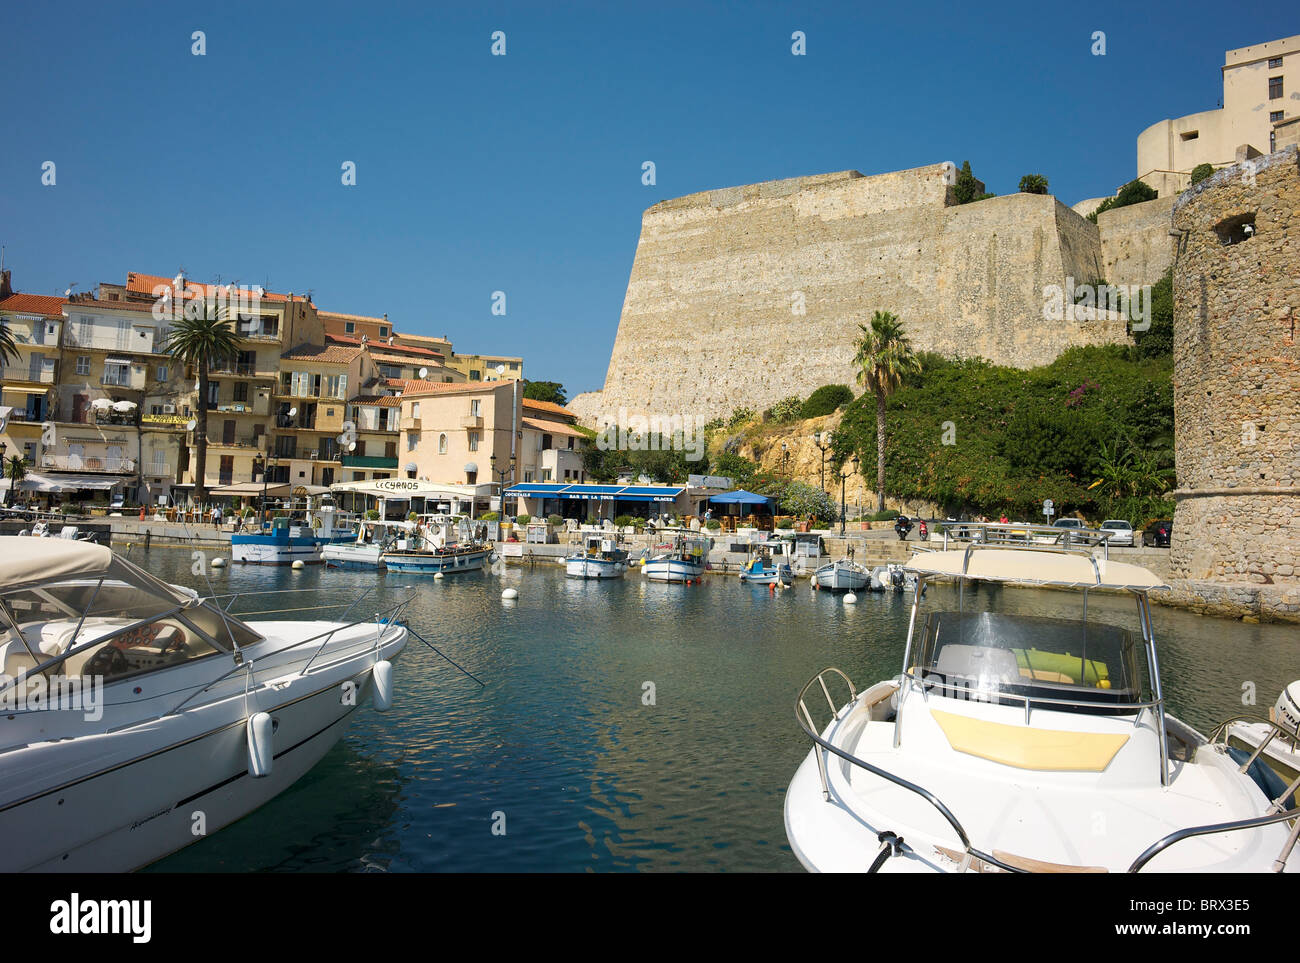 Yachts in the marina at Calvi, with the walls of the Citadels. Stock Photo